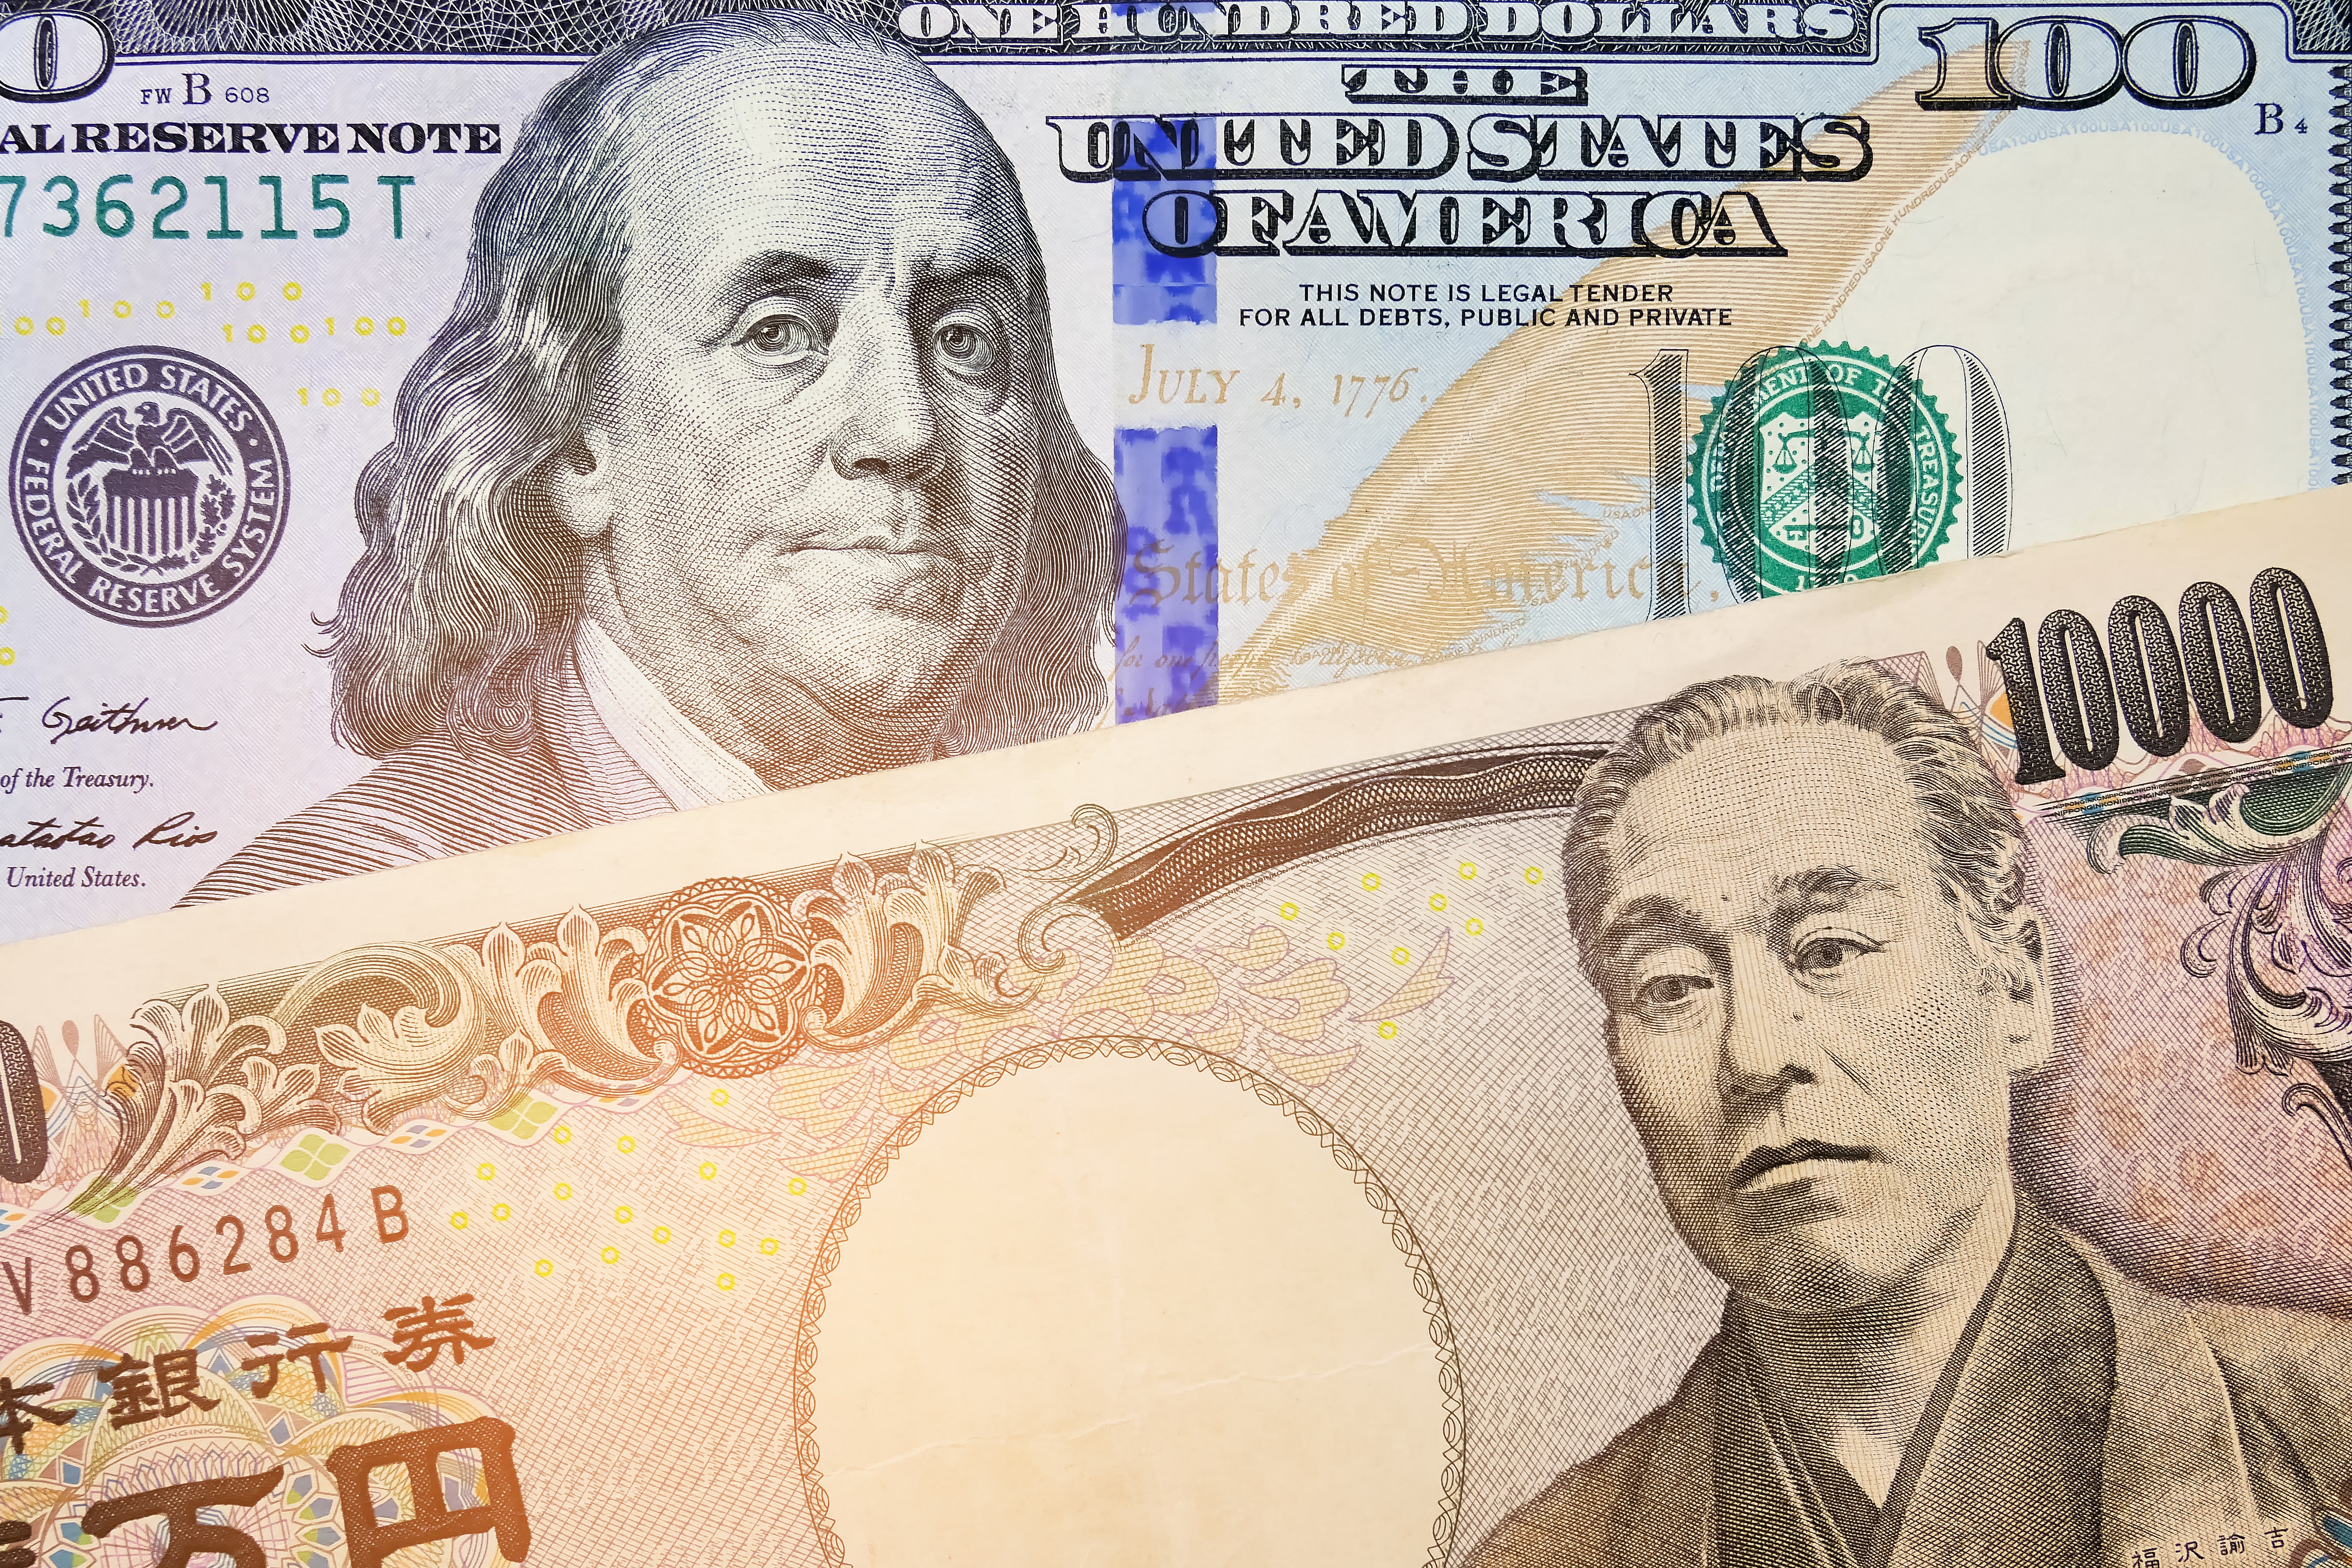 Japanese Insurance Giant Meiji Yasuda Mulls Buying US Treasuries — Only In This Scenario